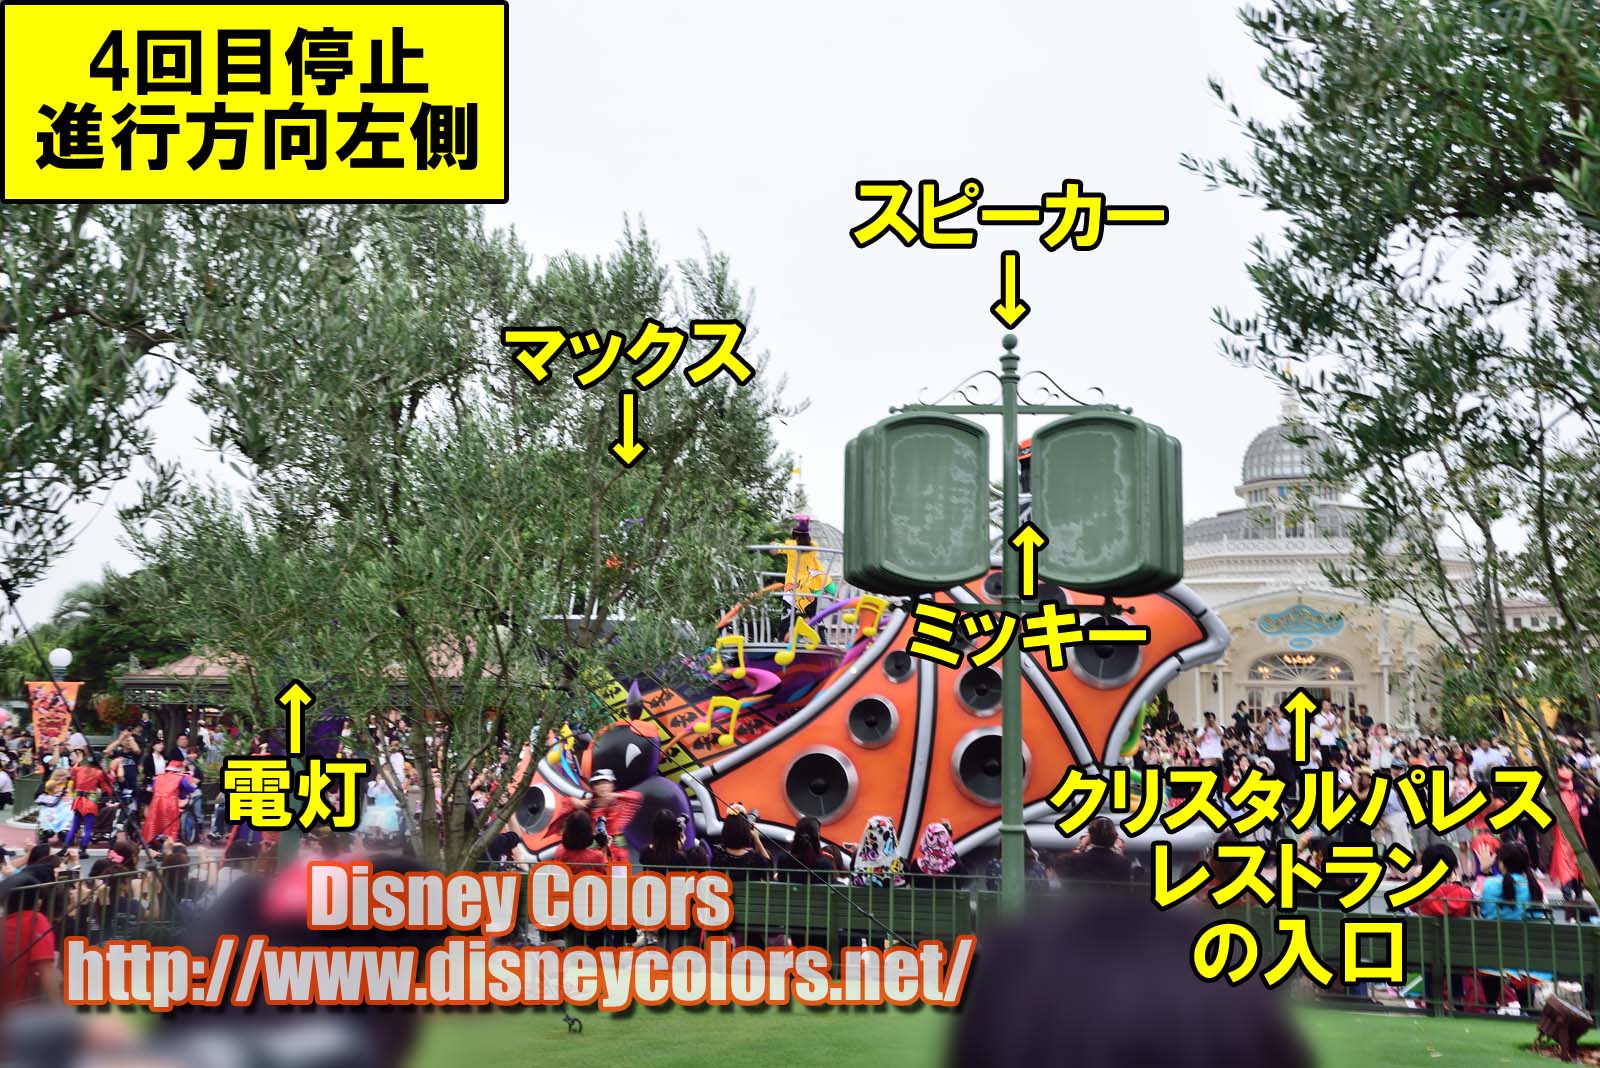 Tdl ハロウィーン ポップンライブ17 フロート停止位置 鑑賞ガイド Disney Colors Event Guide